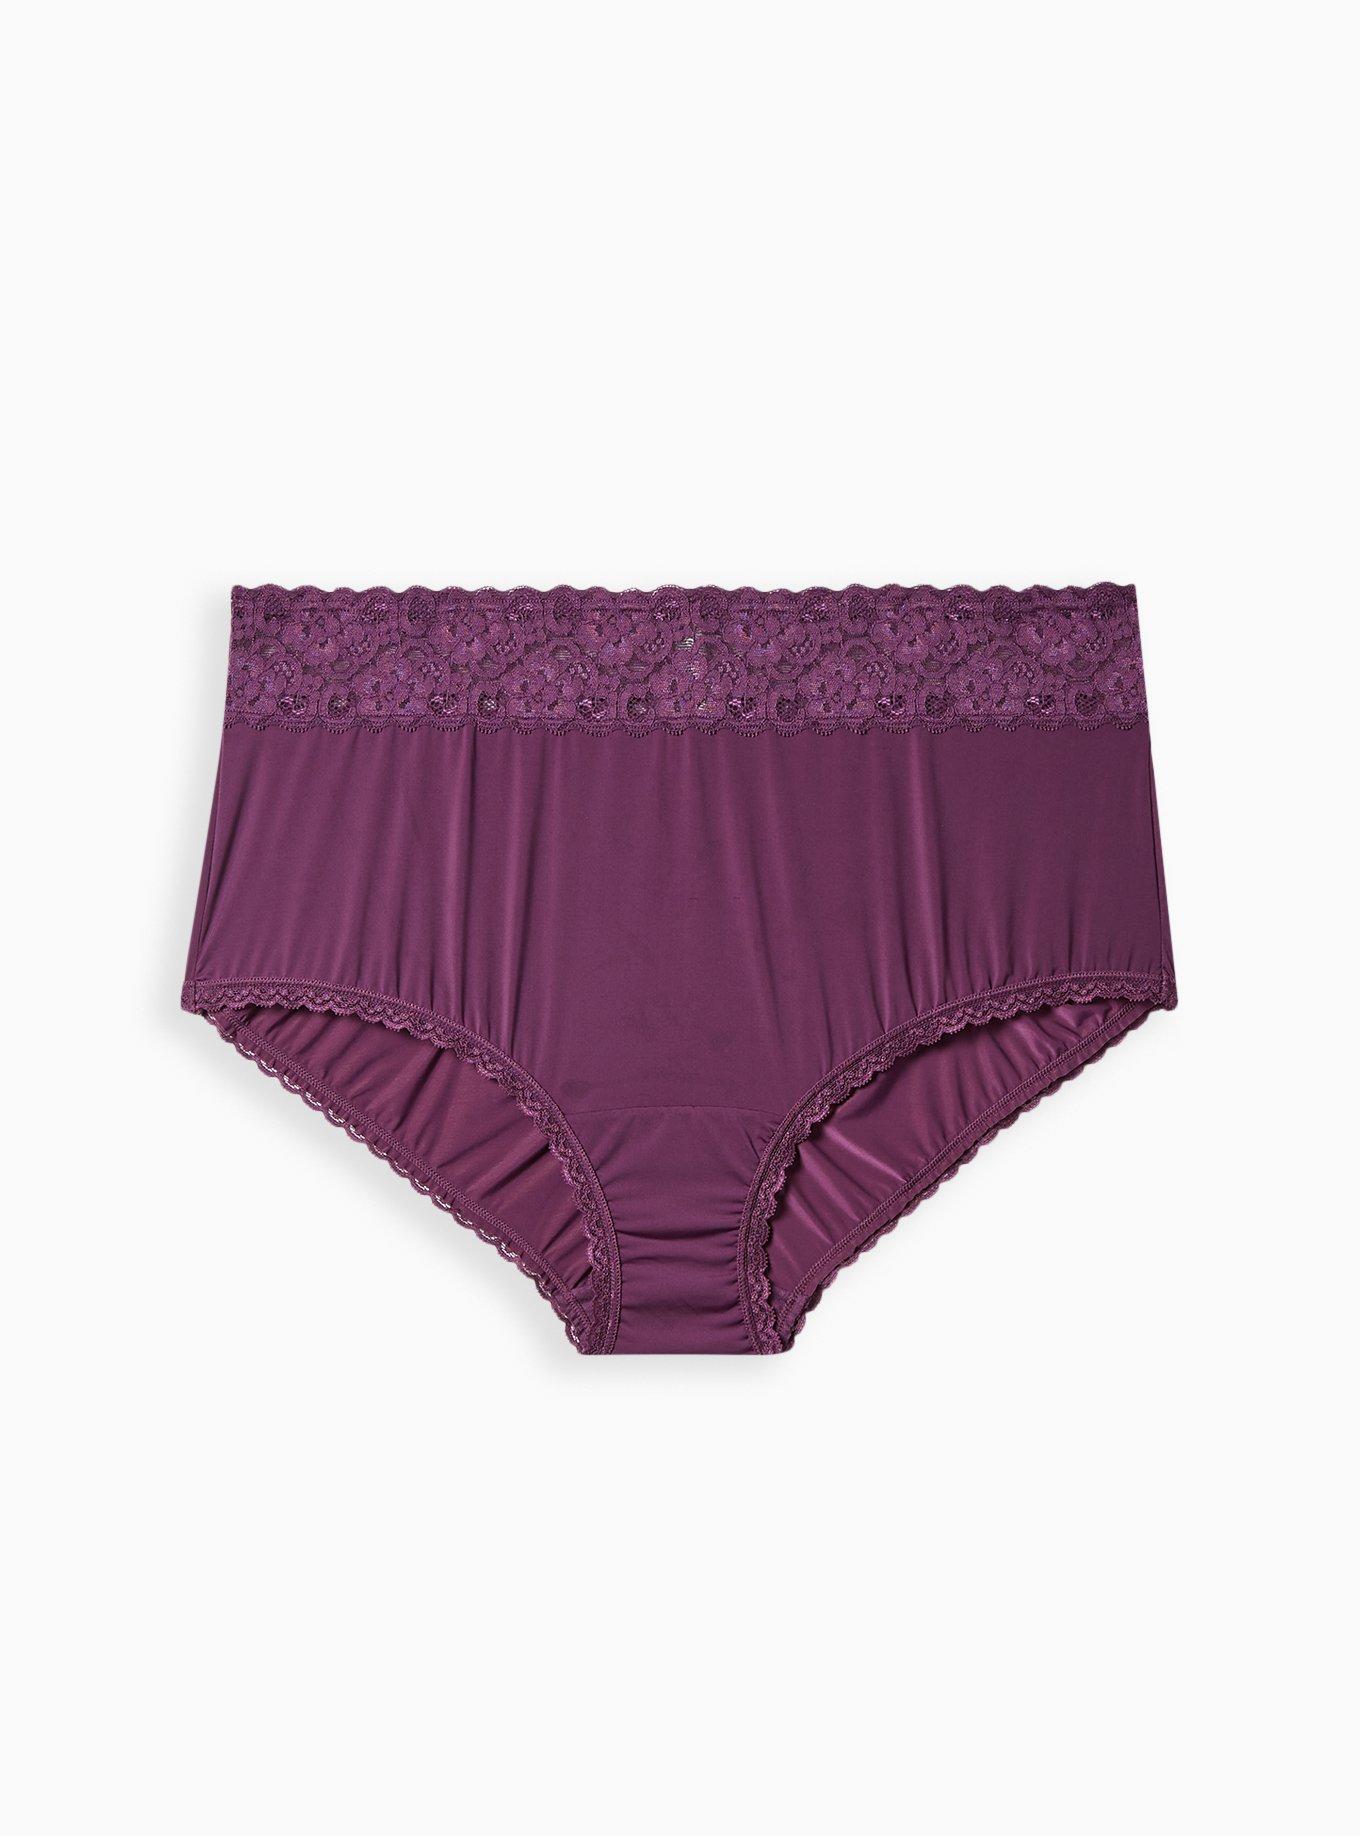 Plus Size - Wide Lace Trim Cheeky Panty - Second Skin Purple - Torrid